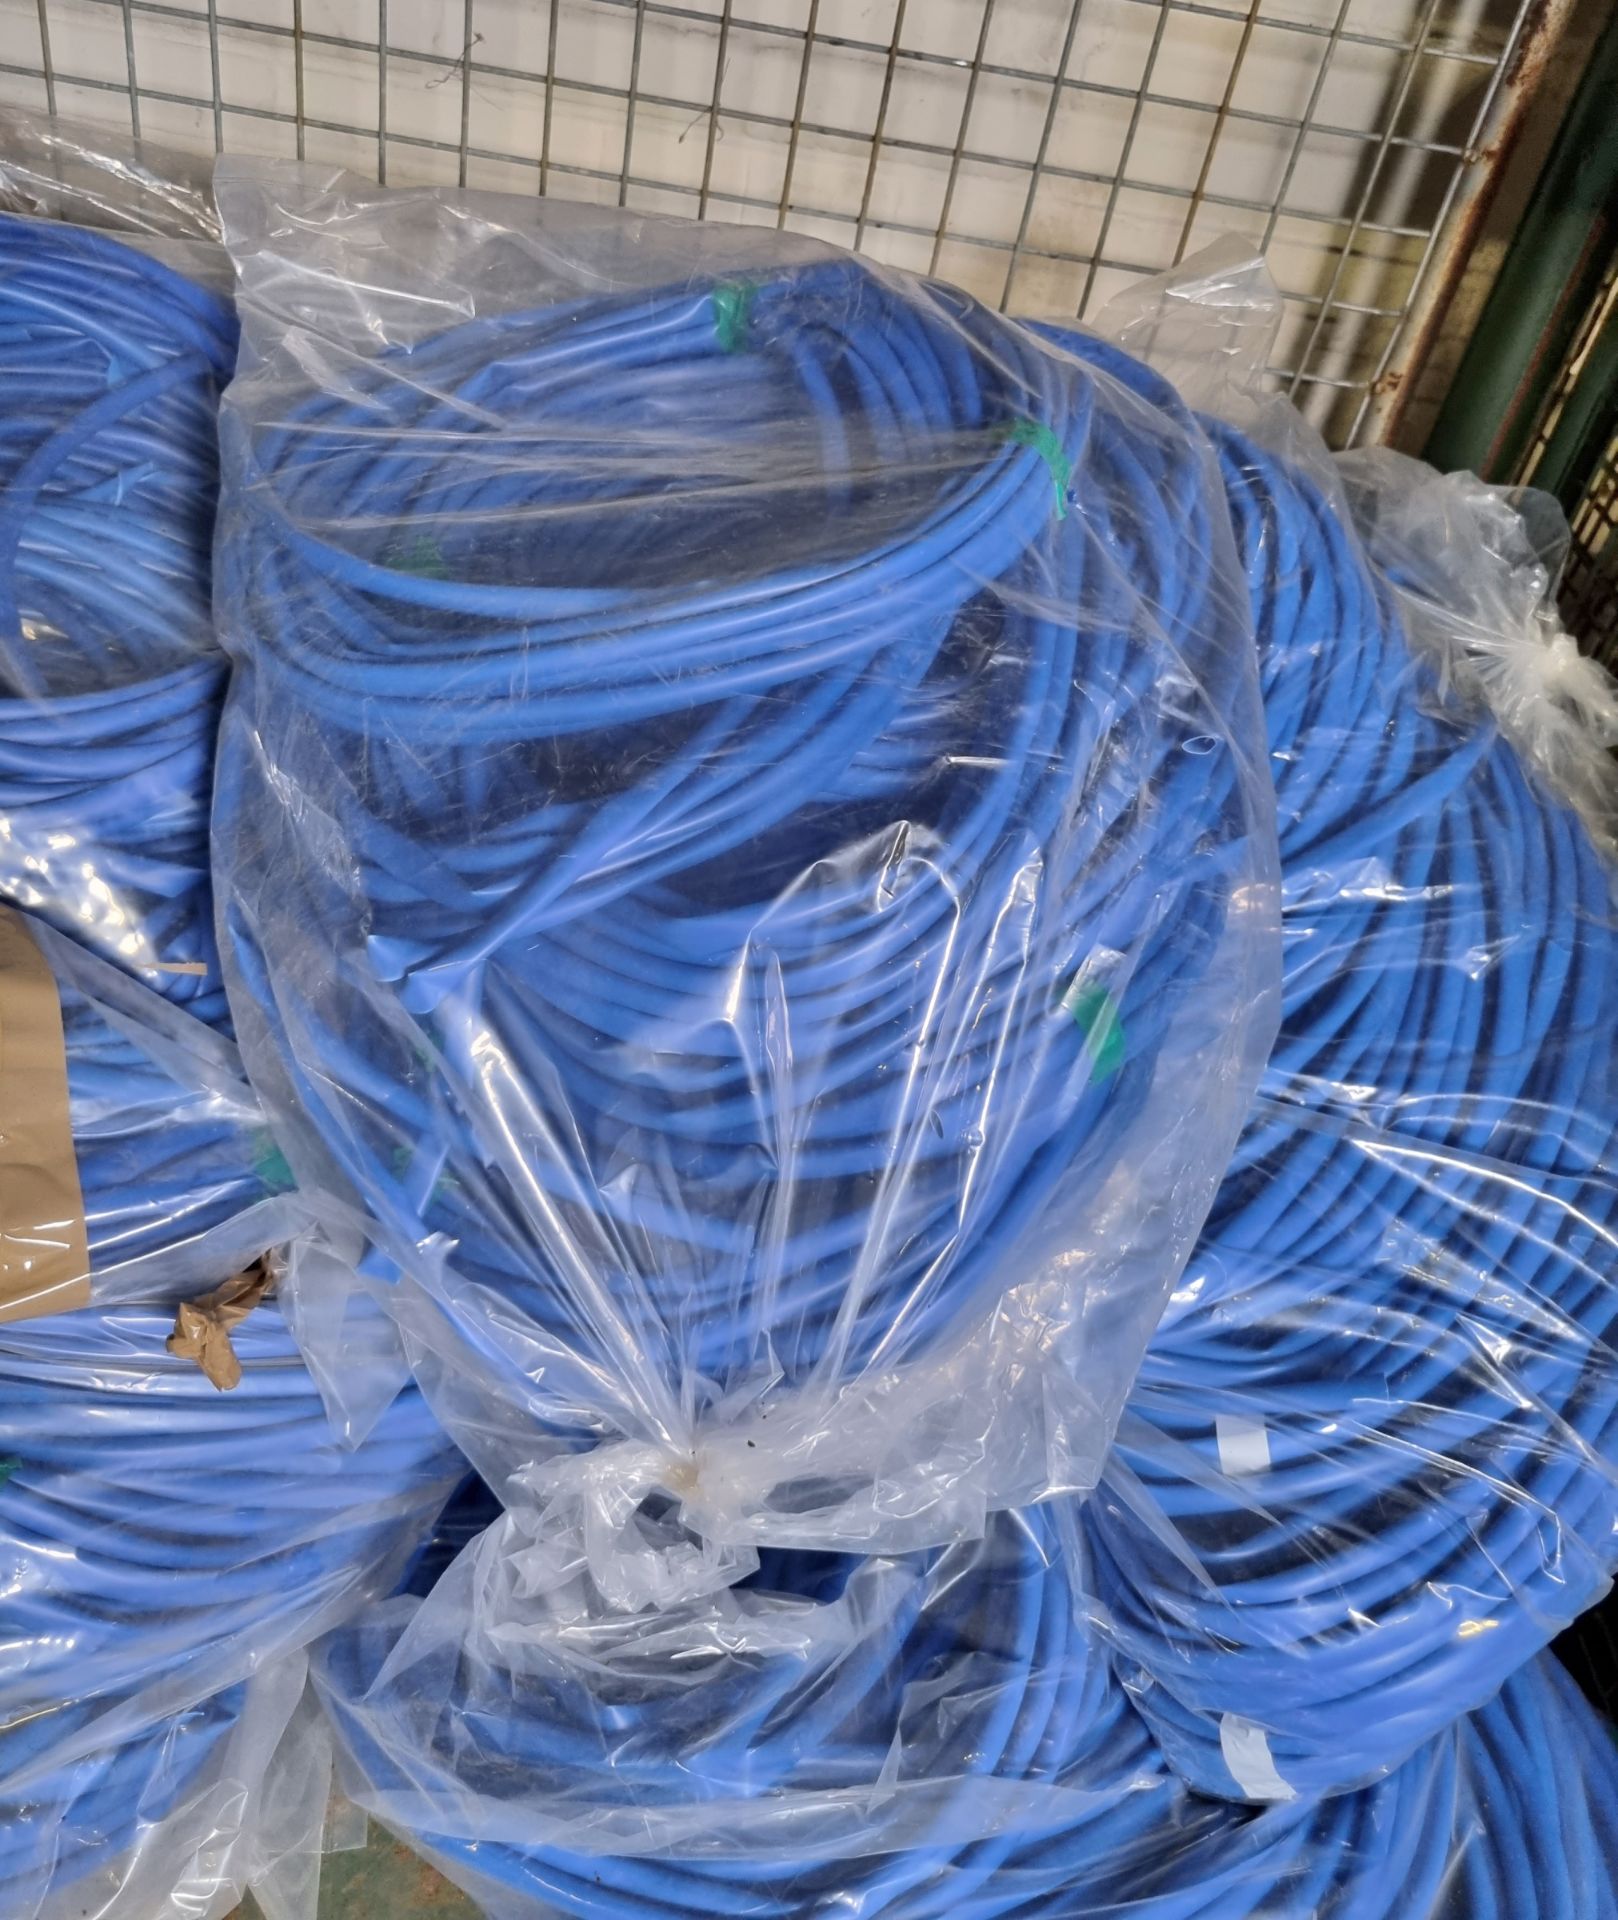 12x packs of blue 12mm x 10m PVC insulator sheath sleeves - 12 sleeves per pack - Image 3 of 3